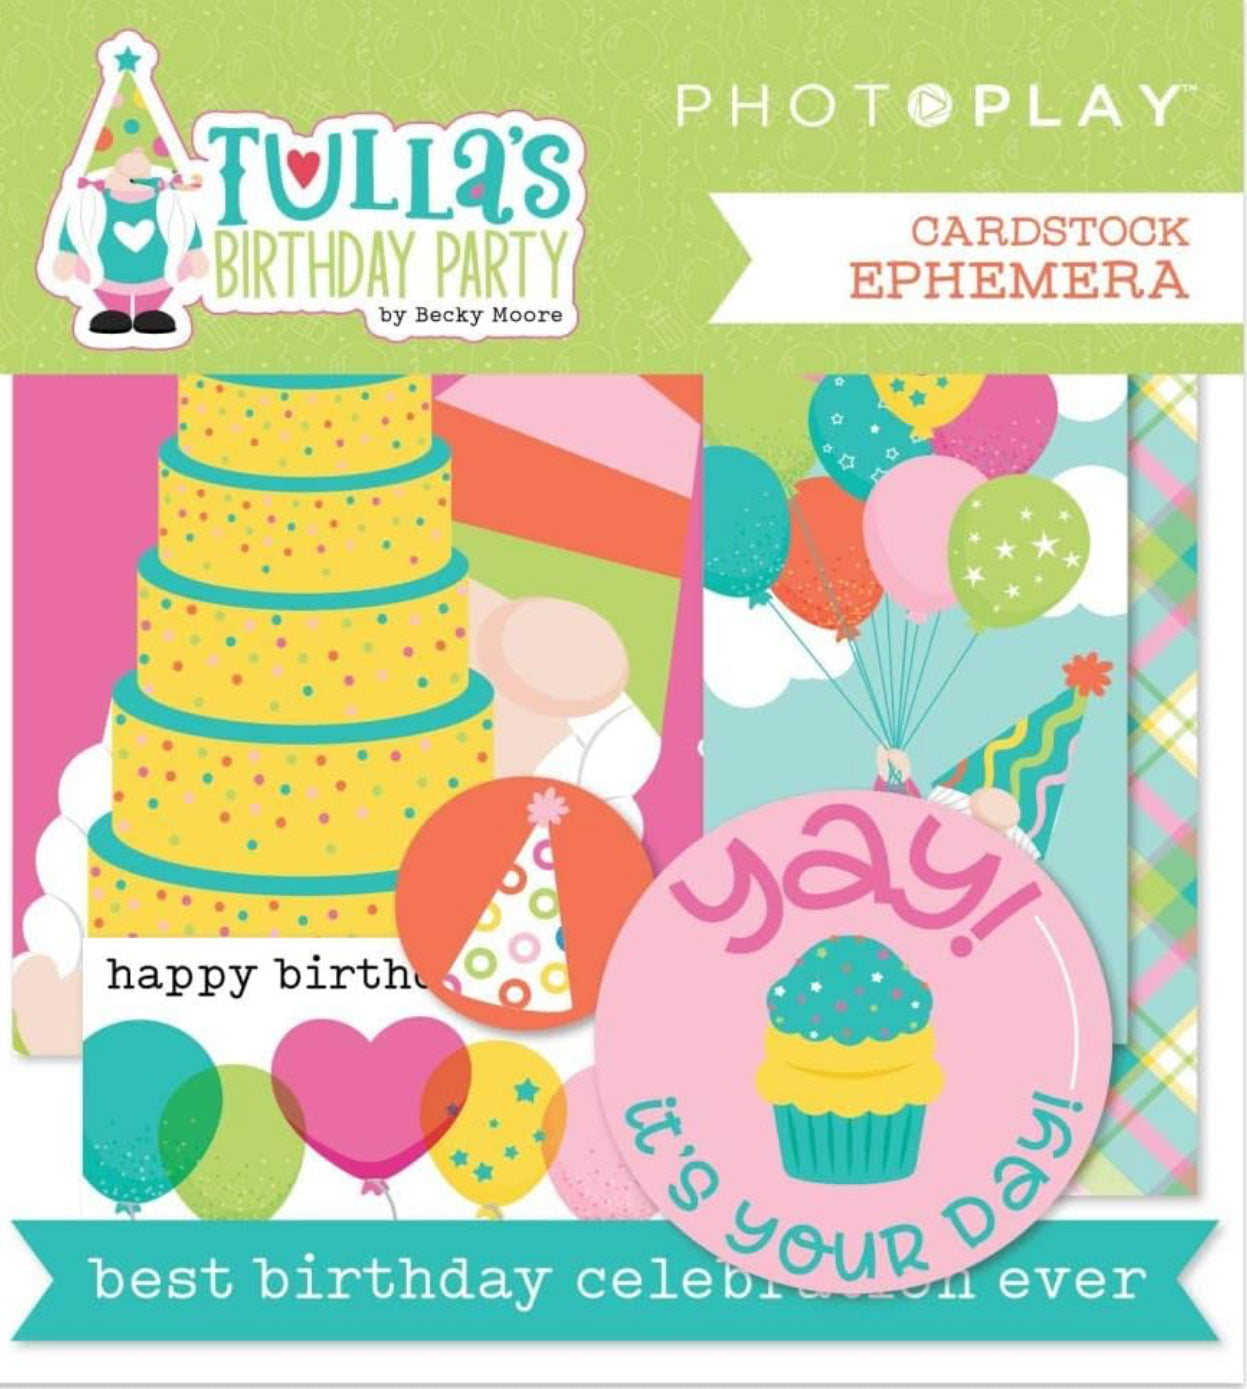 Photo Play - Cardstock Ephemera - Tulla’s Birthday Party